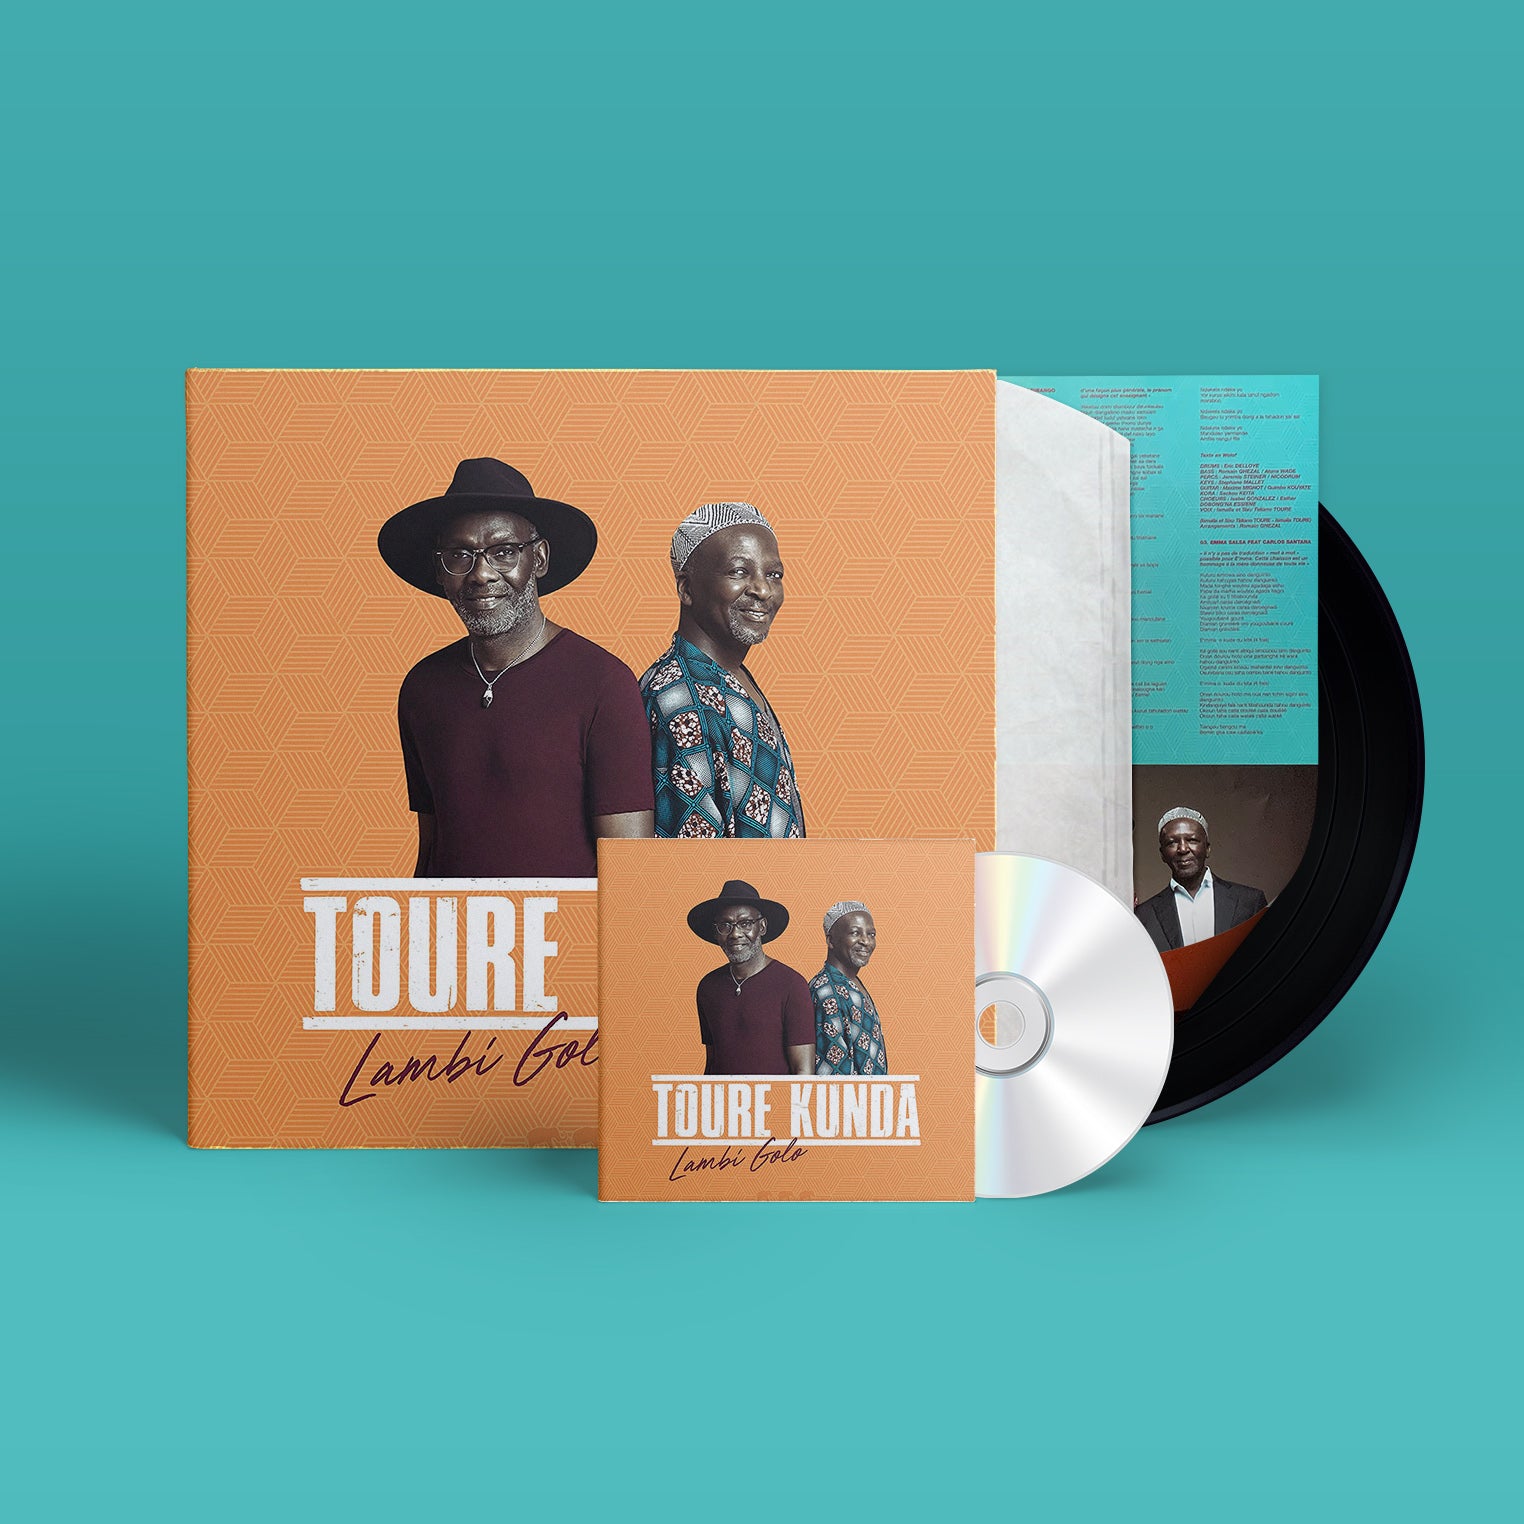 Touré Kunda - Lambi Golo